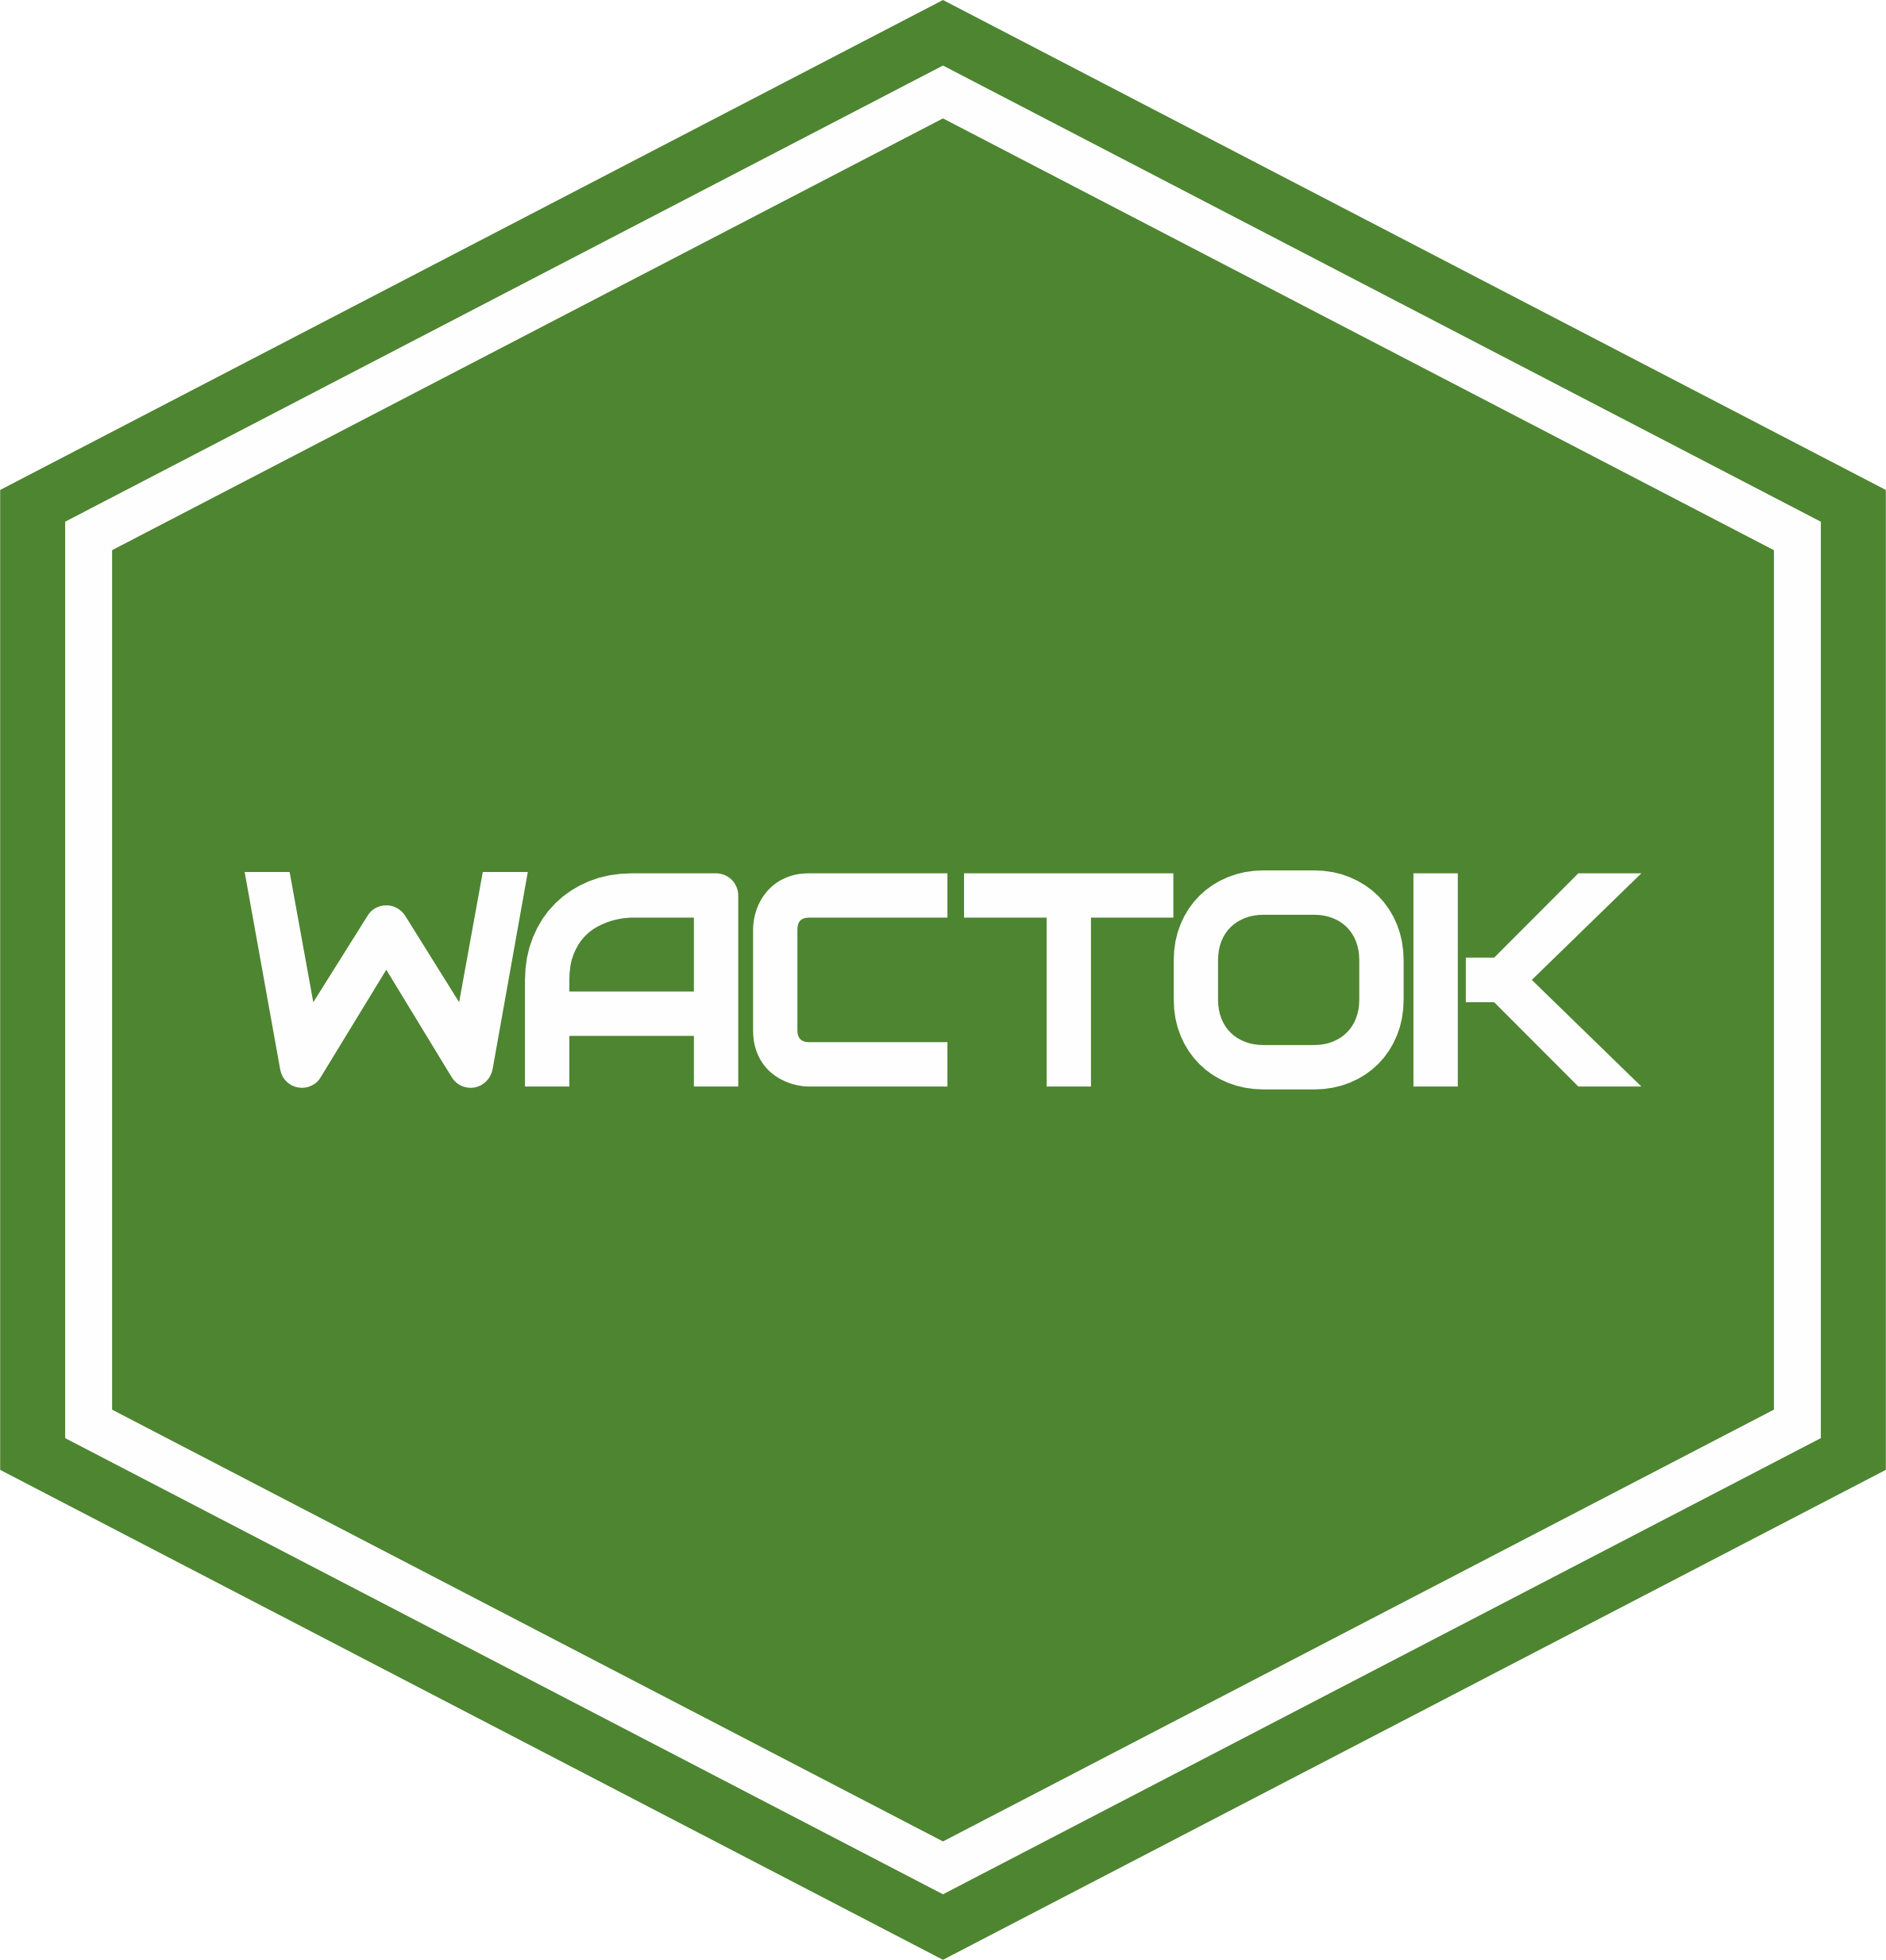 WACTOK 👛 TOKENIZED CURRENCY WALLET